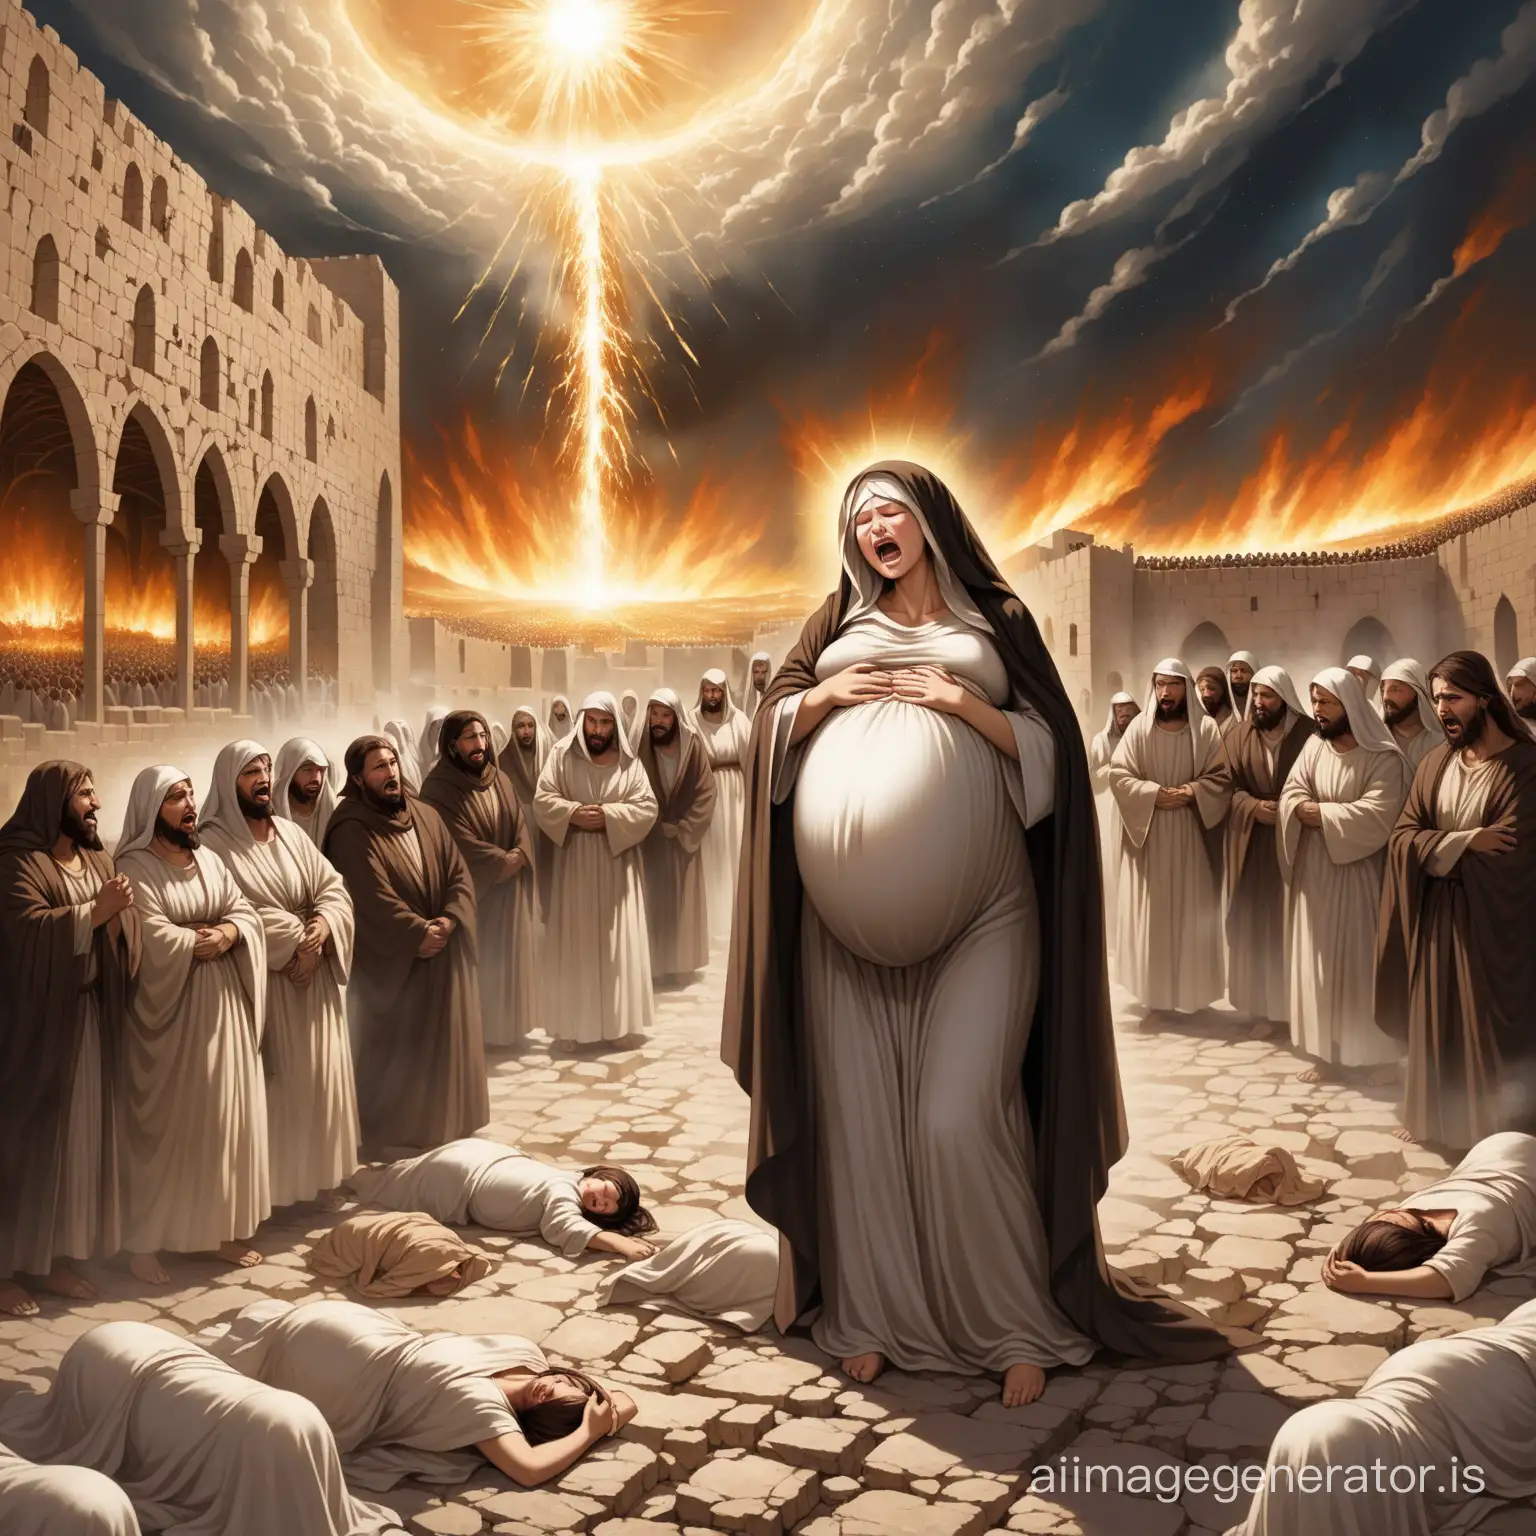 Destruction-of-Jerusalem-Prophecy-Pregnant-Woman-Amid-Chaos